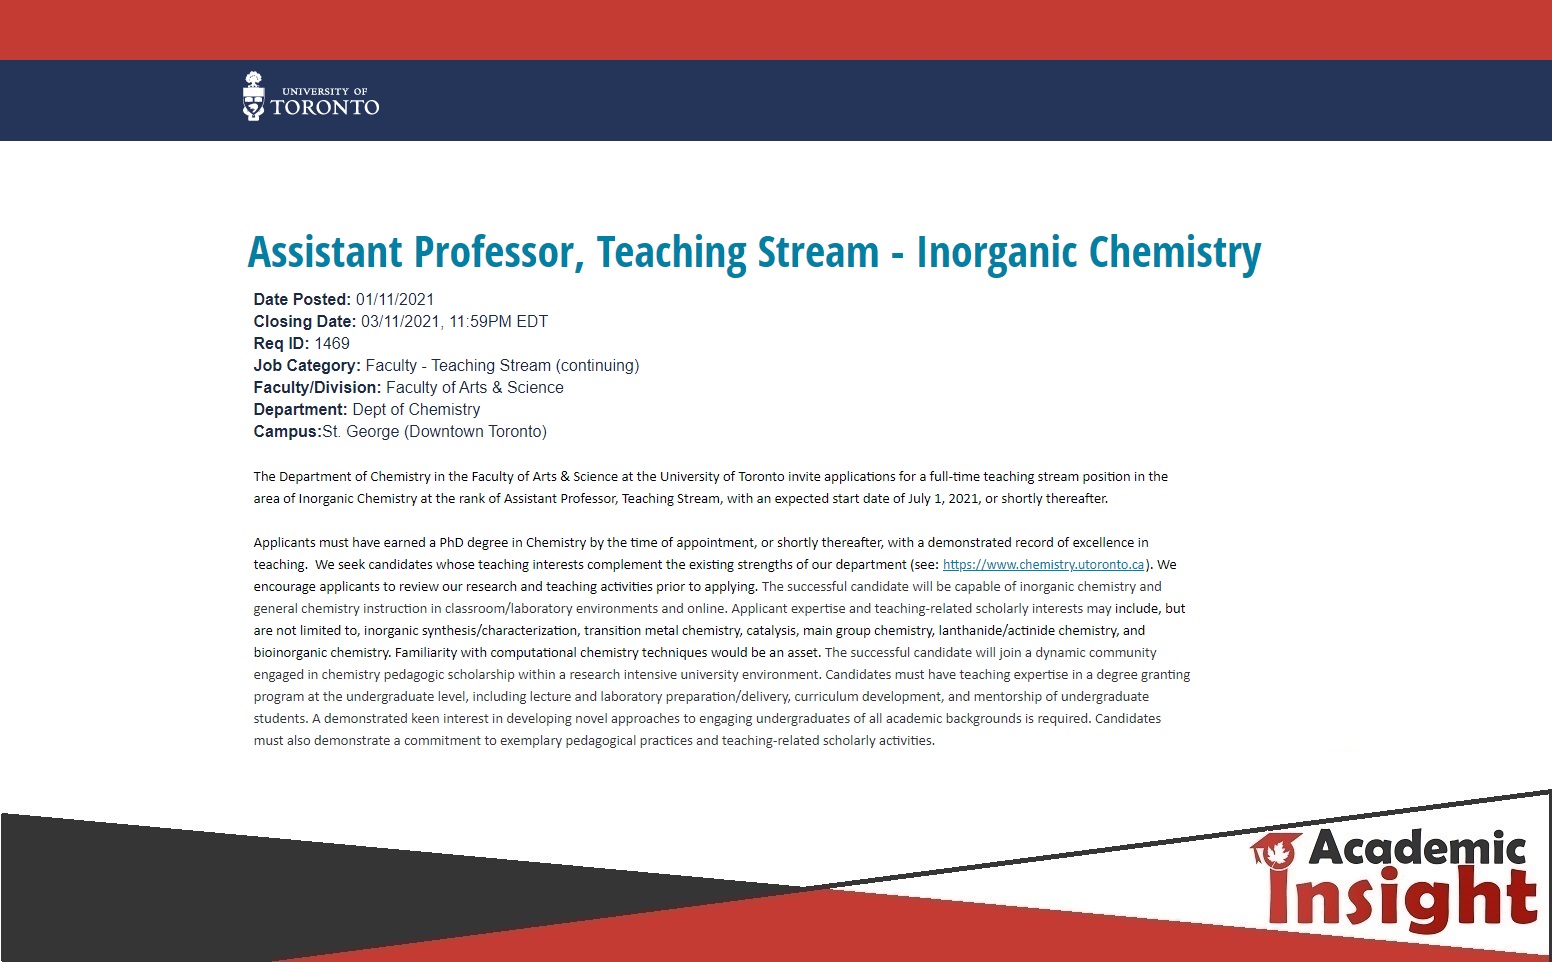 Assistant Professorship of Teaching Stream in Inorganic Chemistry at University of Toronto